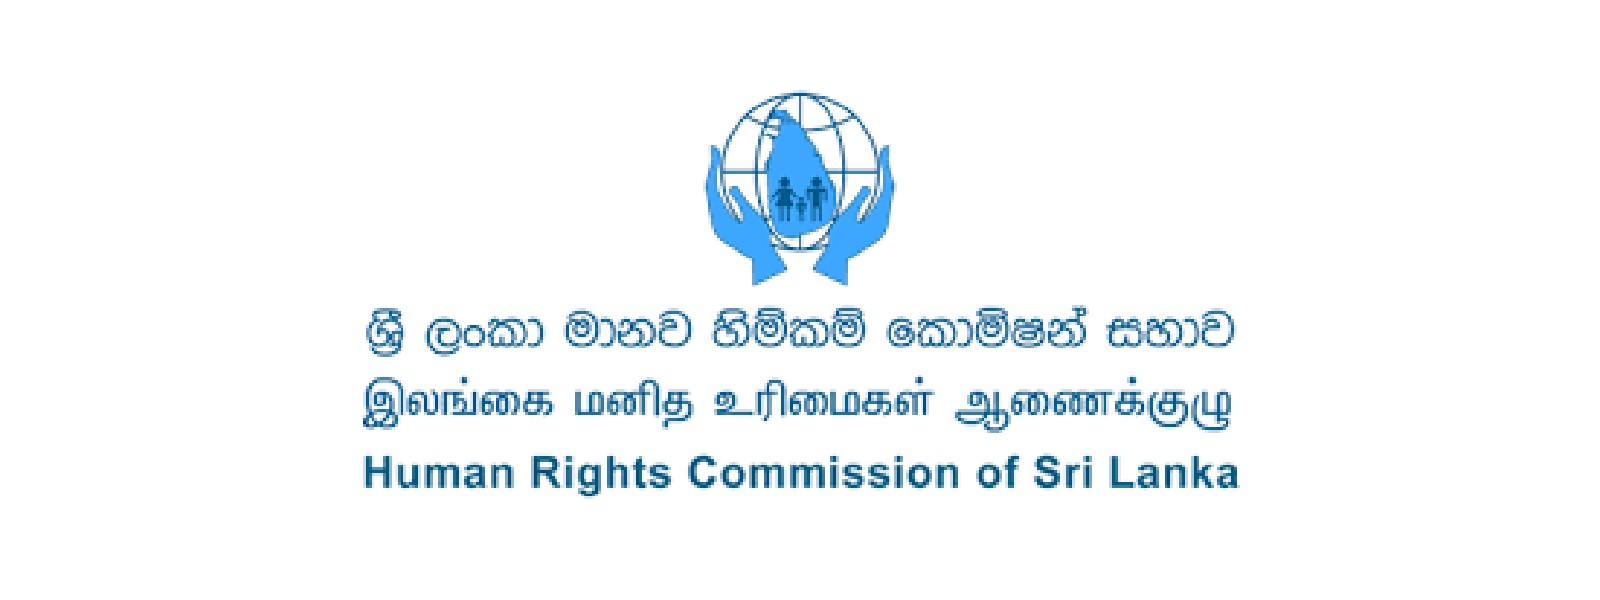 Human Rights Commission sends inquiry team to Rambukkana